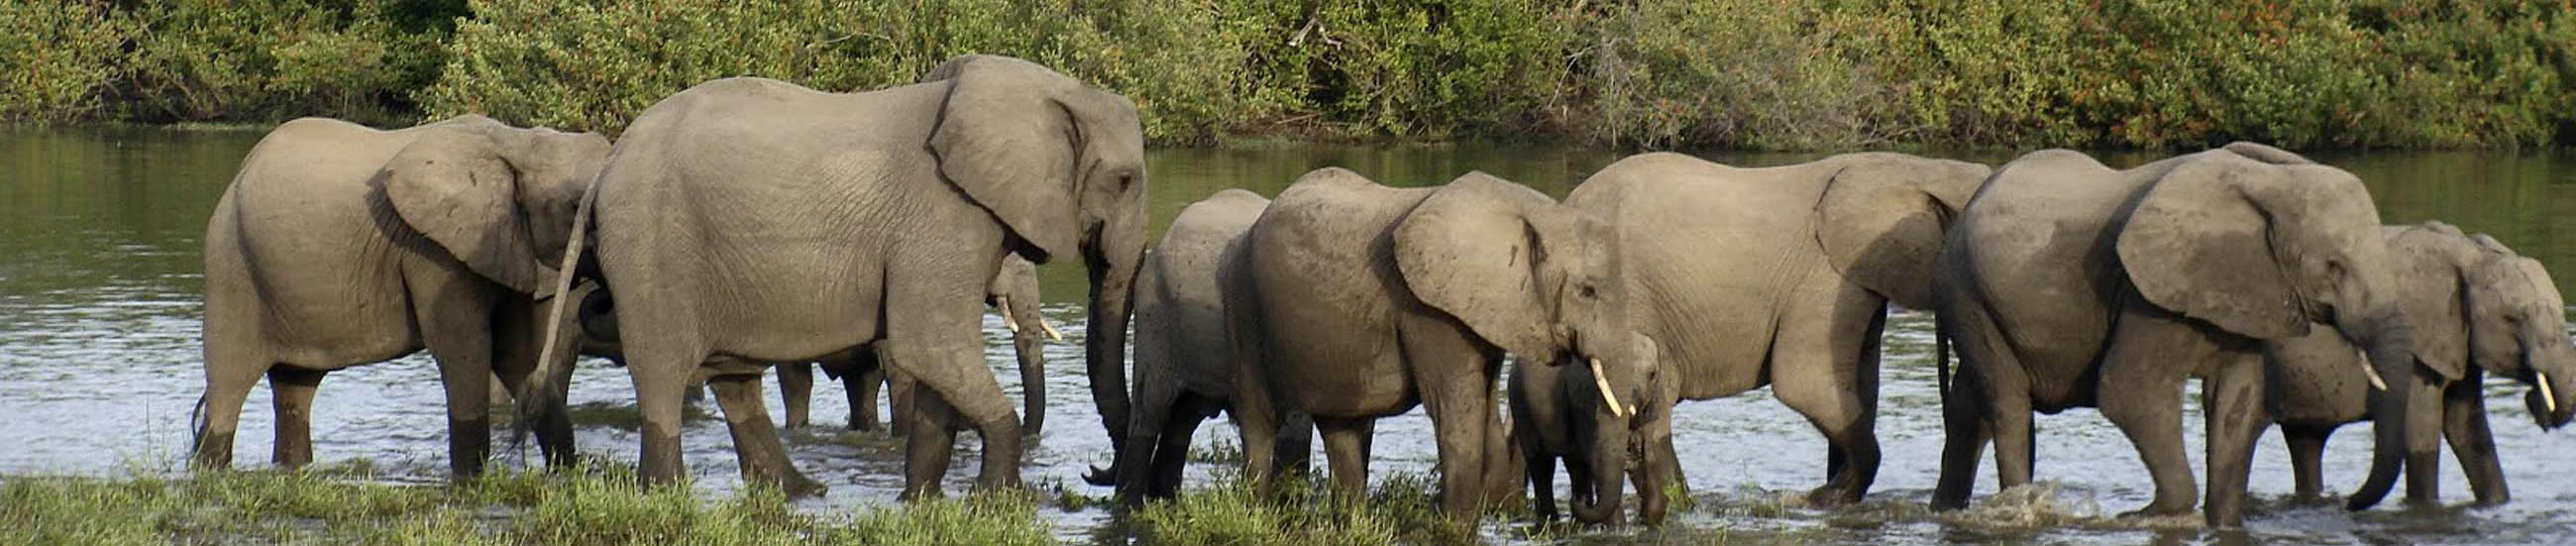 Elephants in Saadani | Experience Zanzibar Tours & Safaris